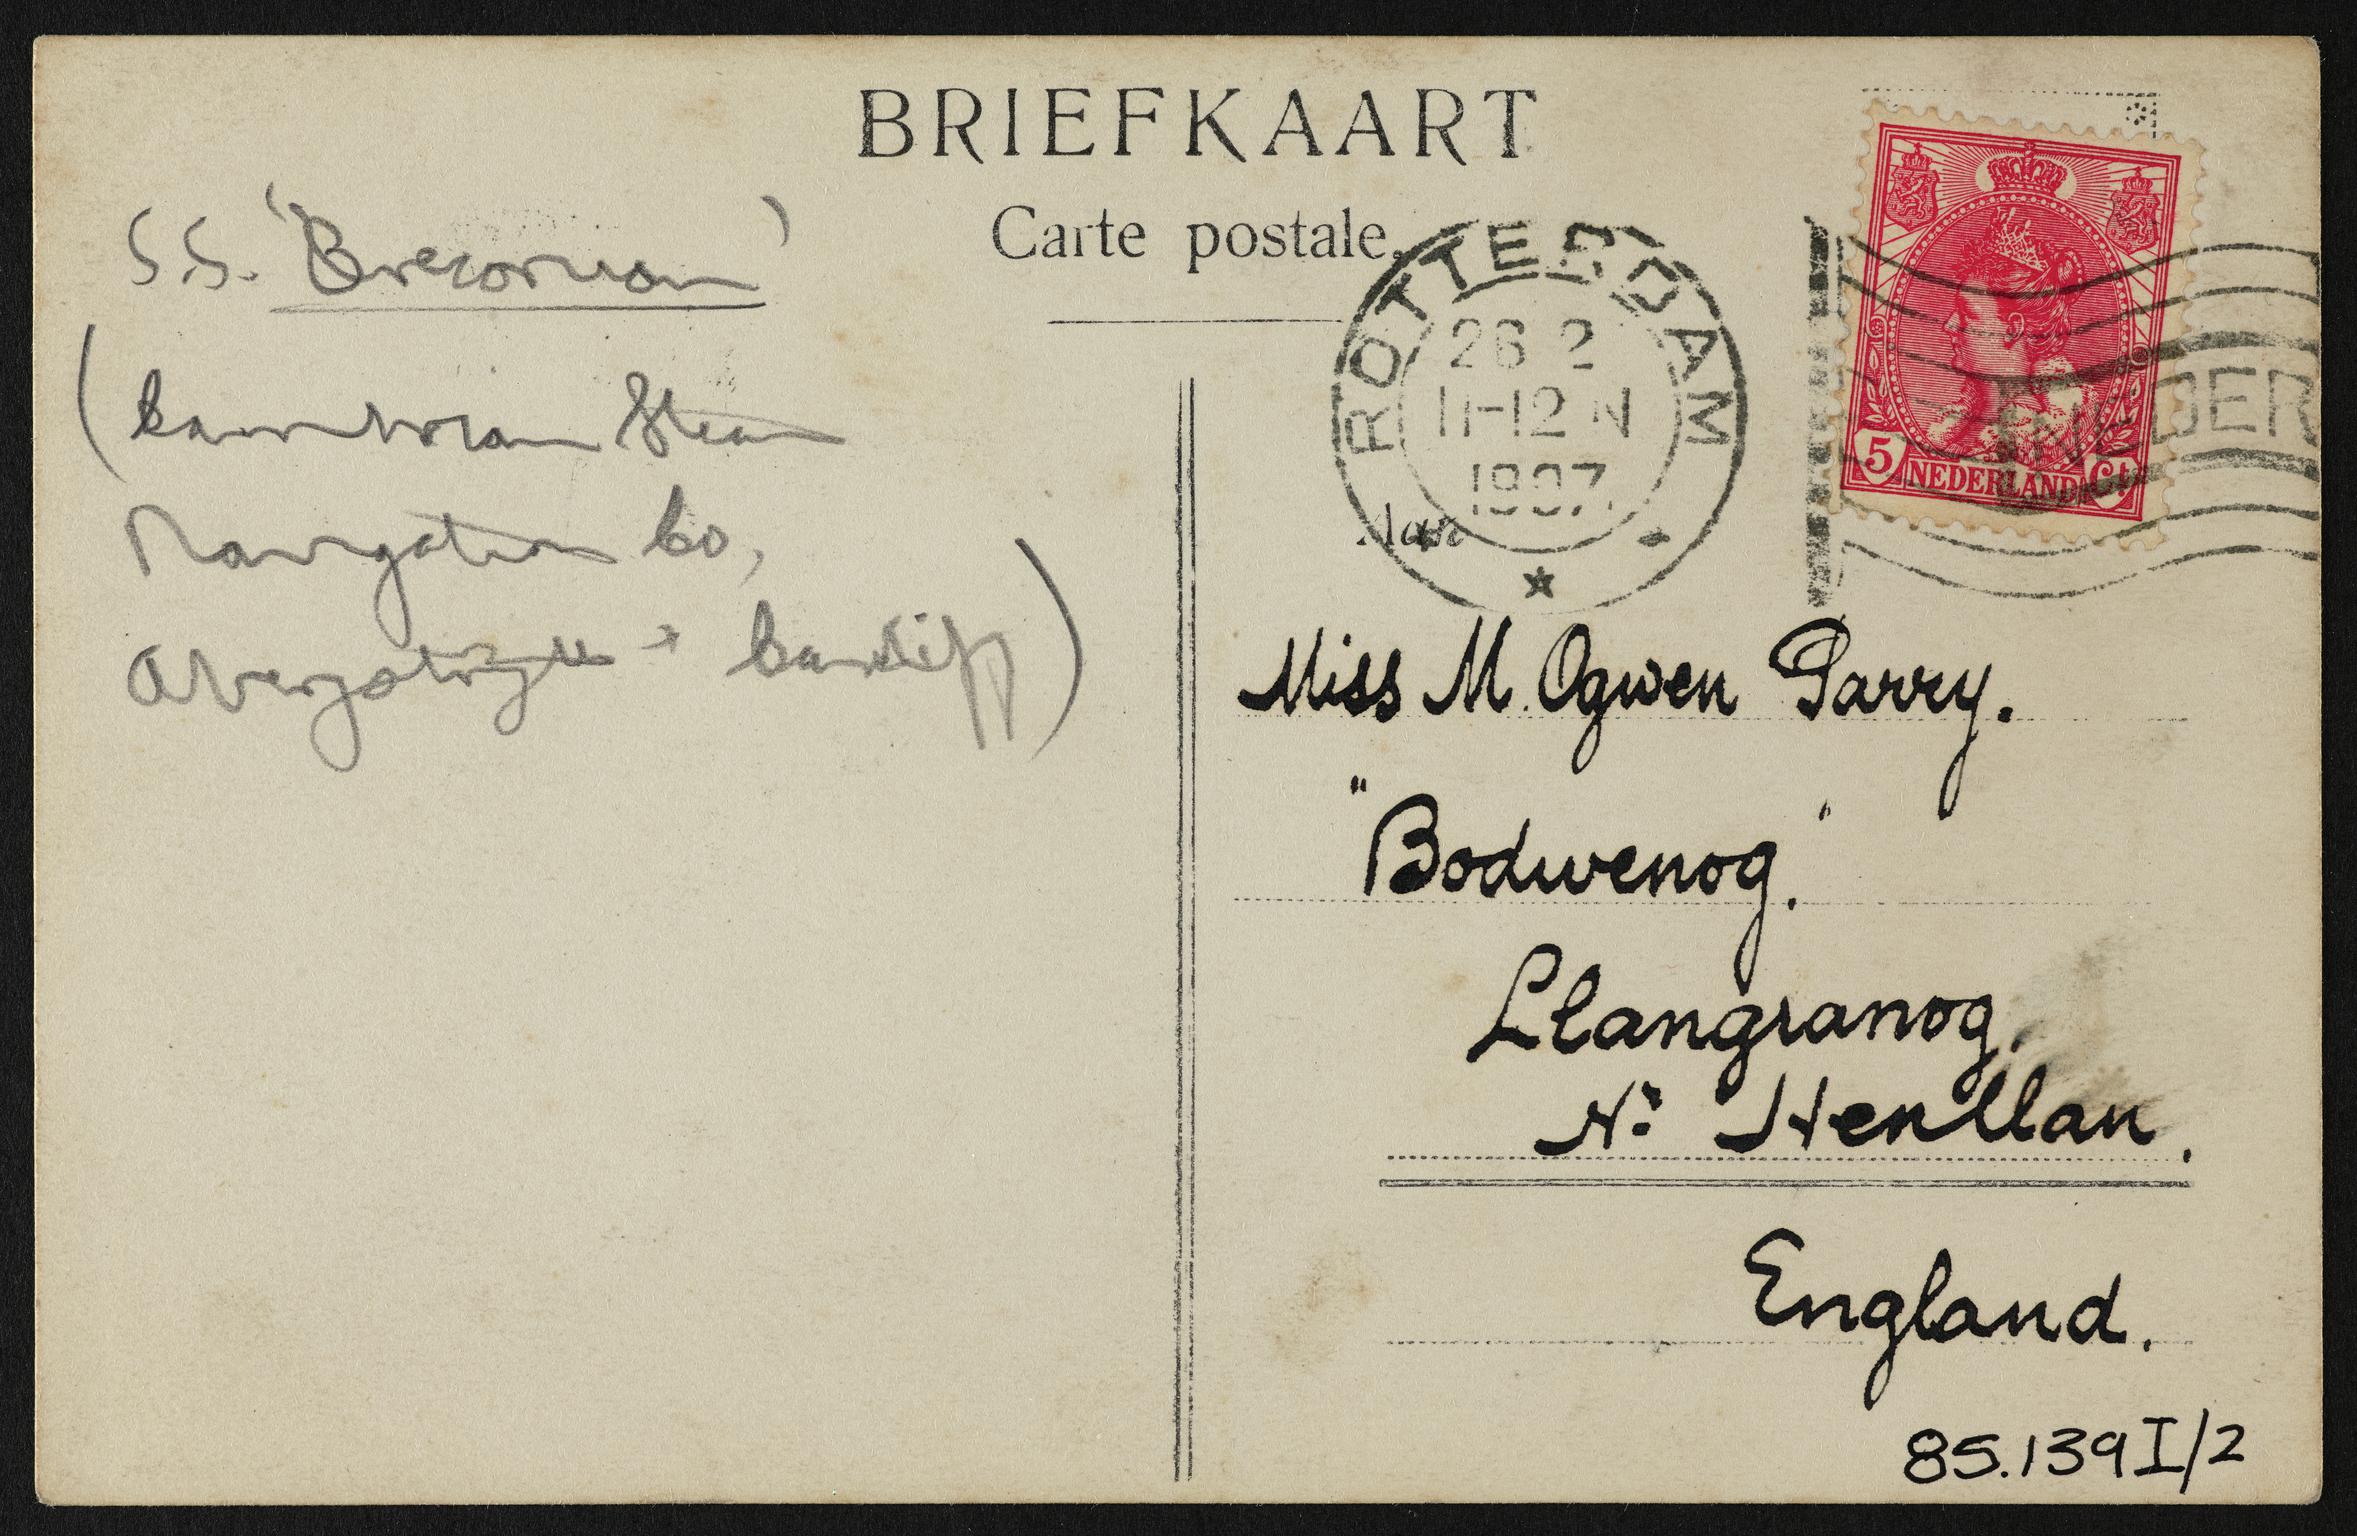 S.S. BRECONIAN, postcard